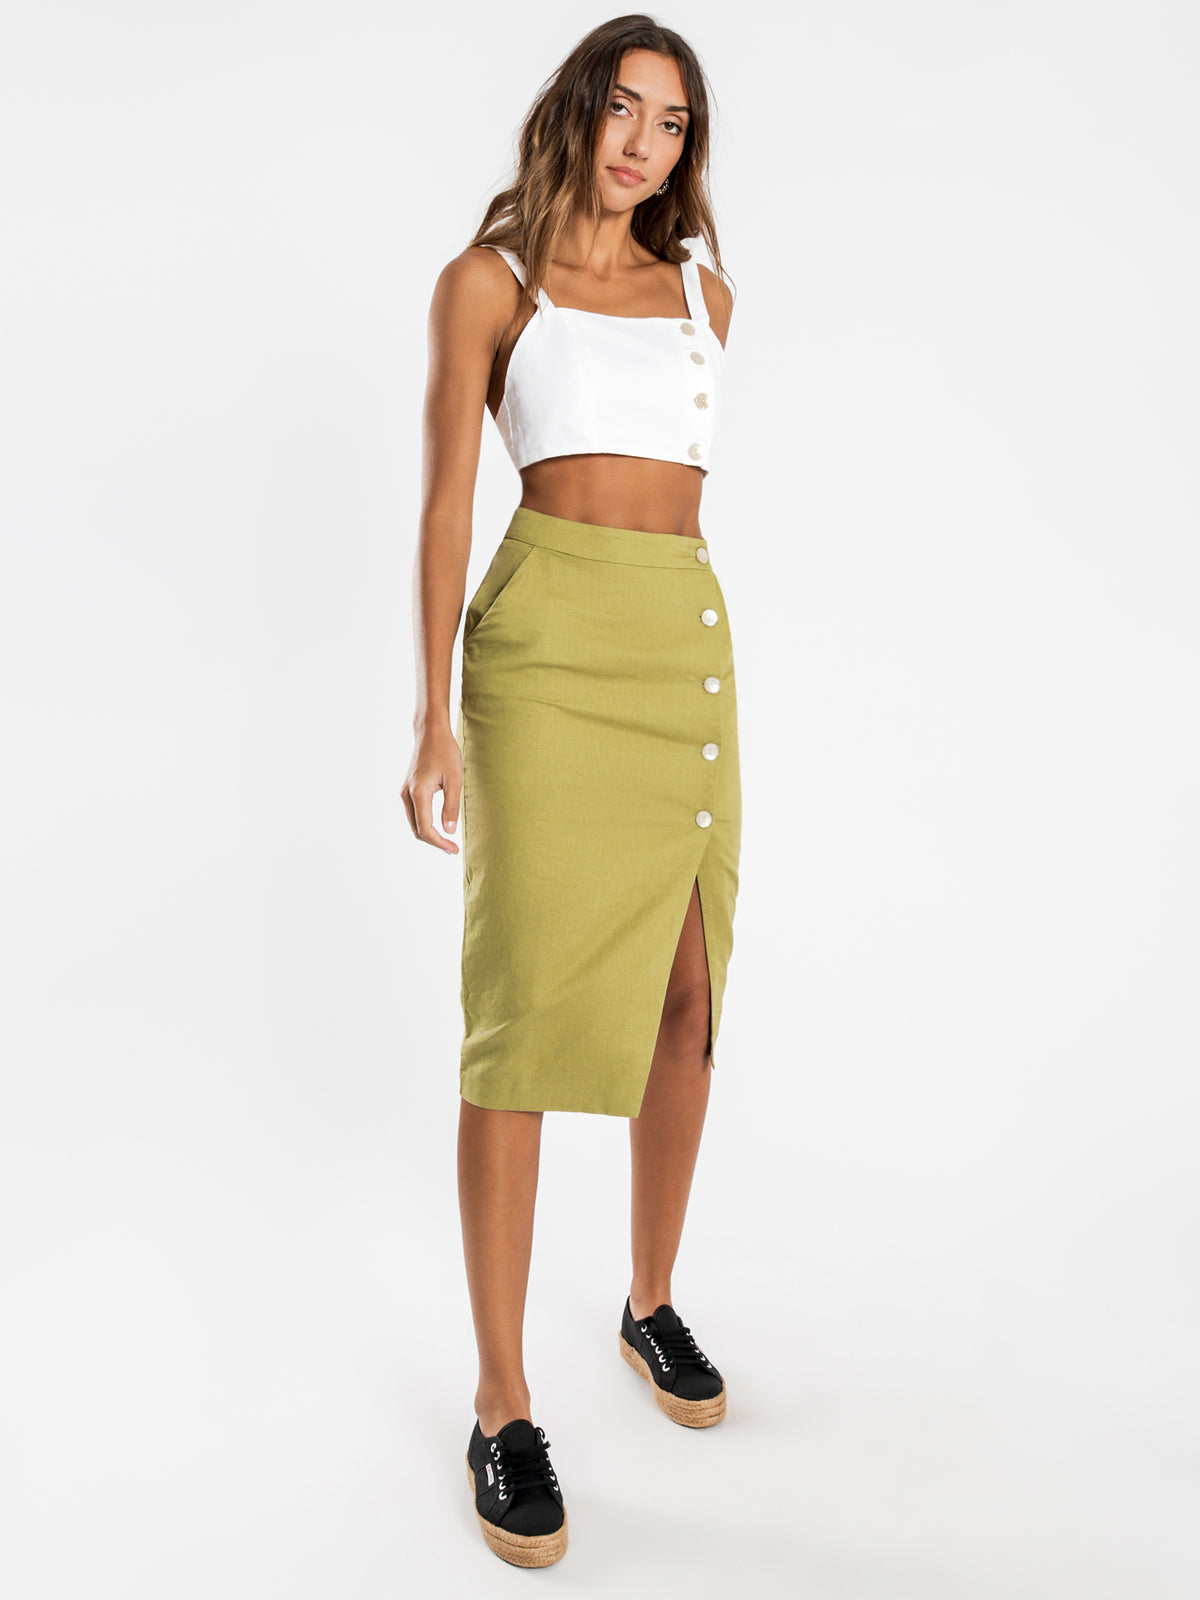 Neve Linen Skirt in Moss Green